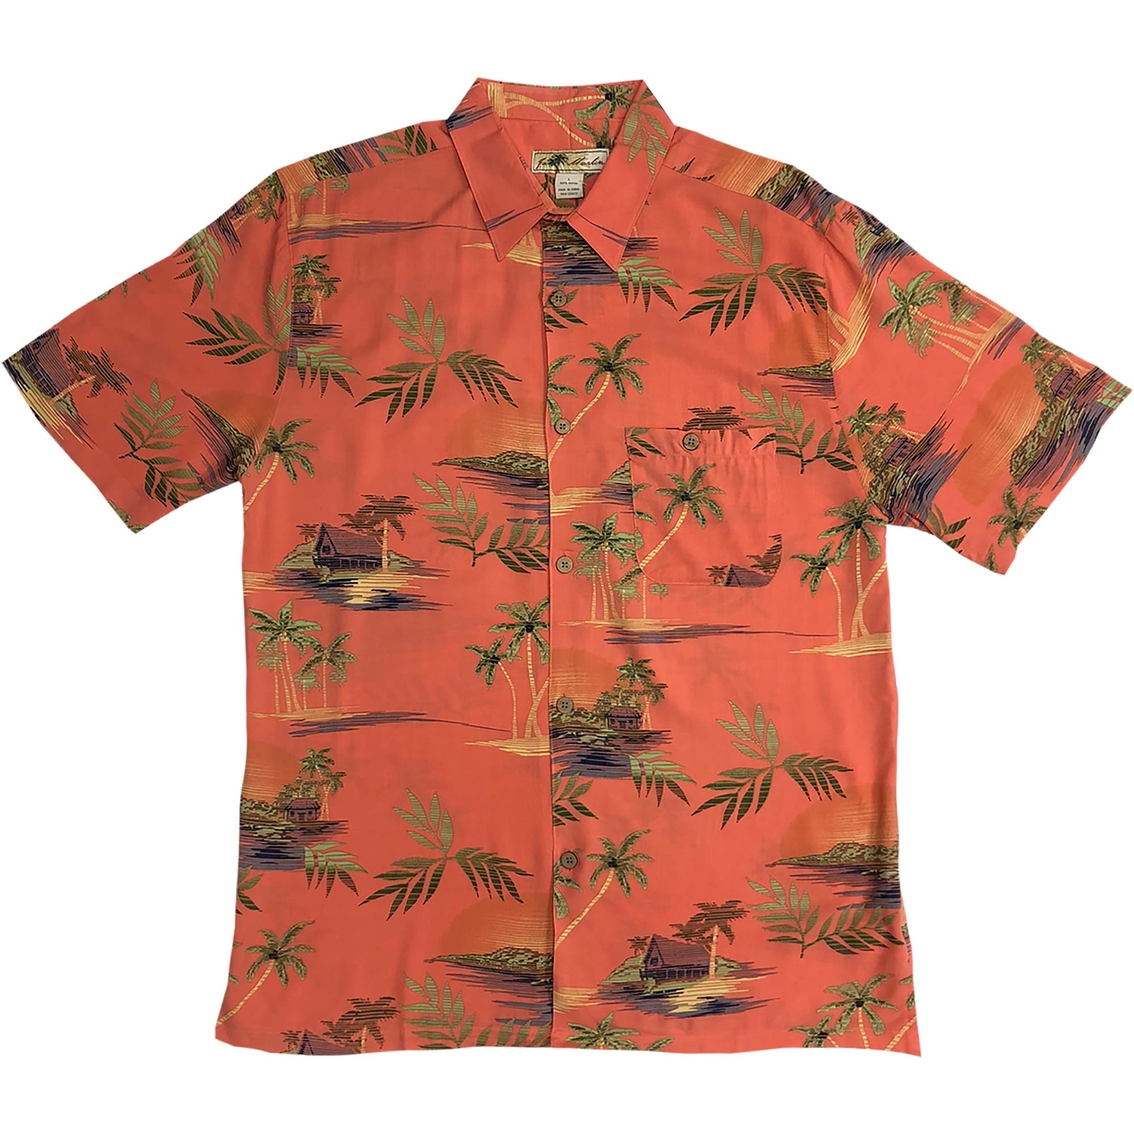 Joe Marlin Solitude Shirt | Shirts | Clothing & Accessories | Shop The ...